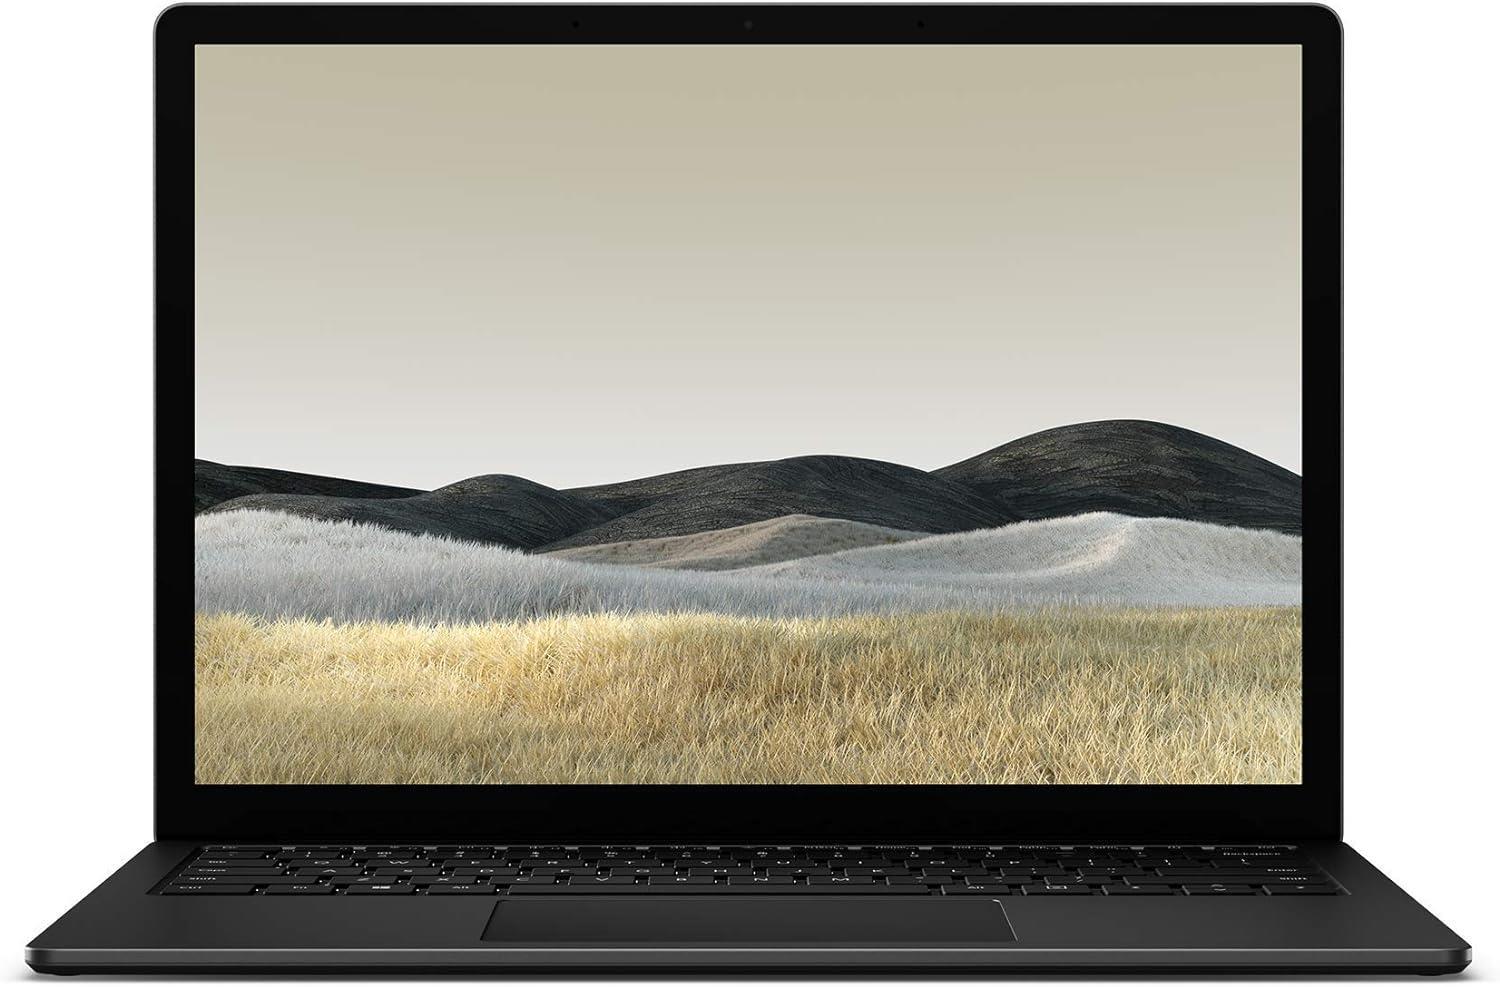 Microsoft Surface Laptop 3 13" i7-1065G7 256GB 16GB Touchscreen Windows Laptop B